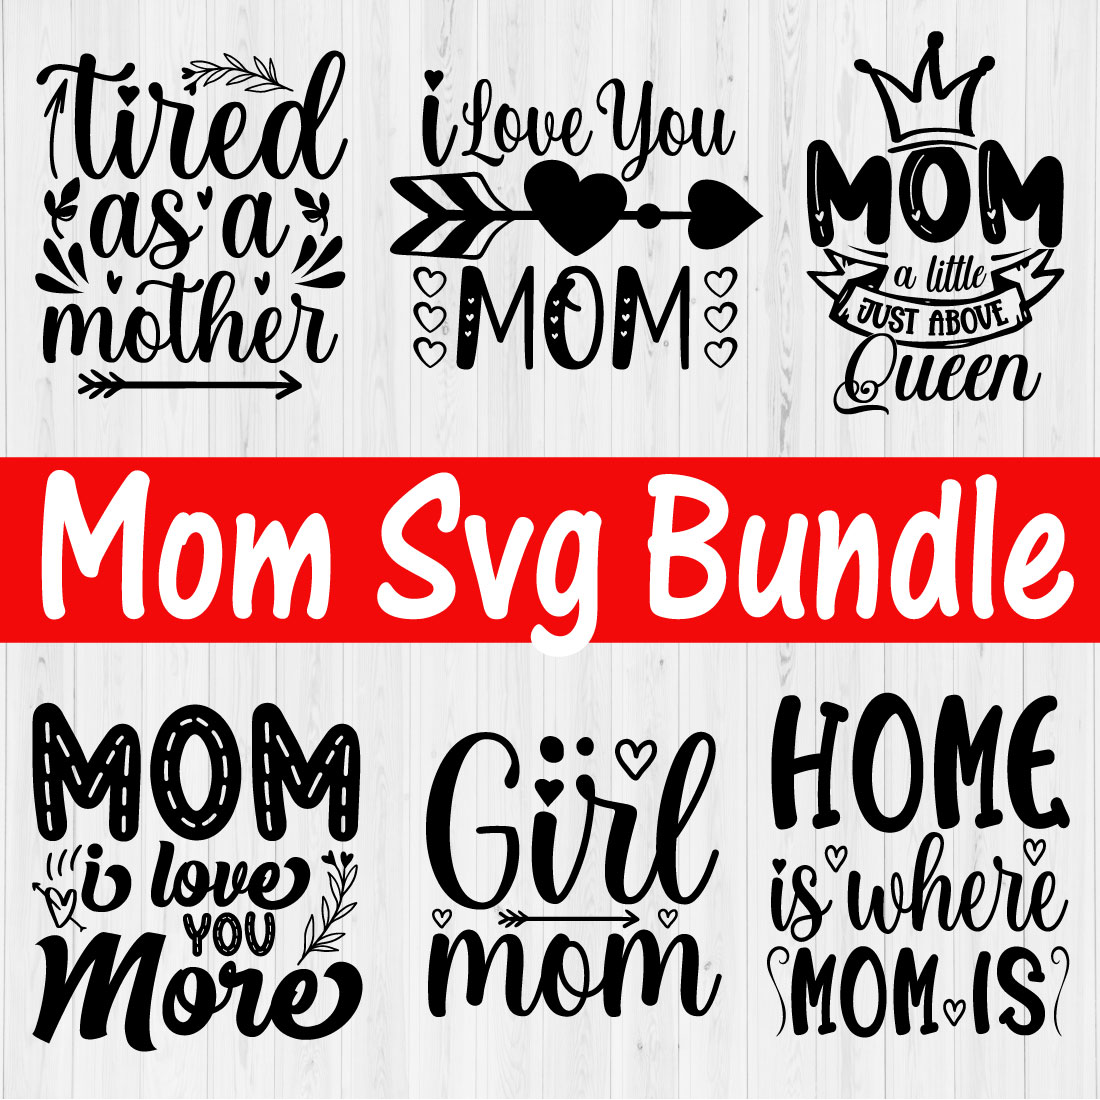 Mom Svg Typography Design Vol17 cover image.